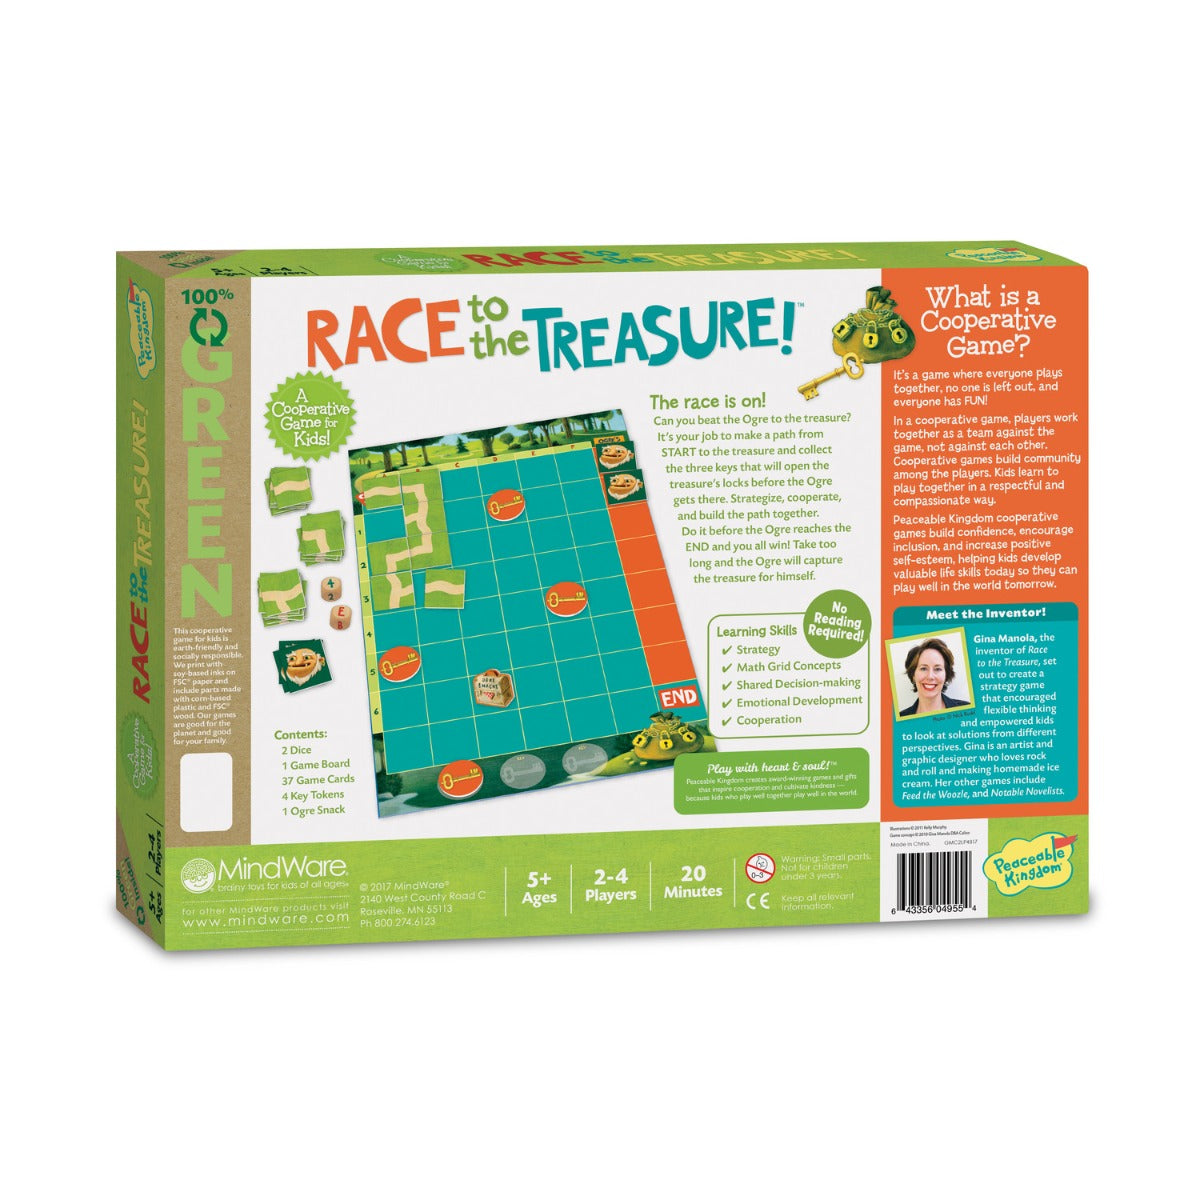 Race to the Treasure - Peaceable Kingdom Cooperative Game